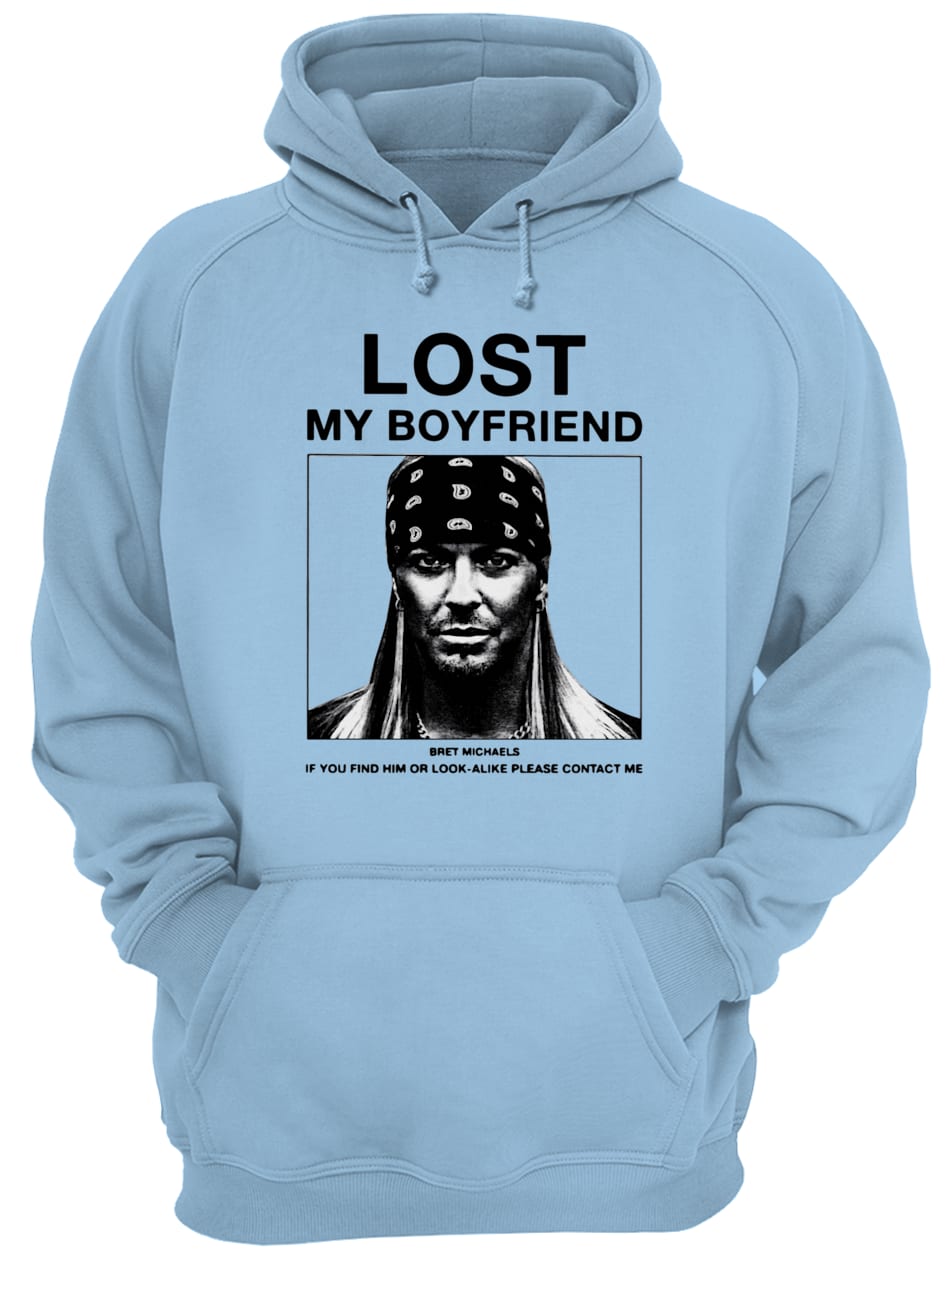 Lost my boyfriend bret michaels hoodie